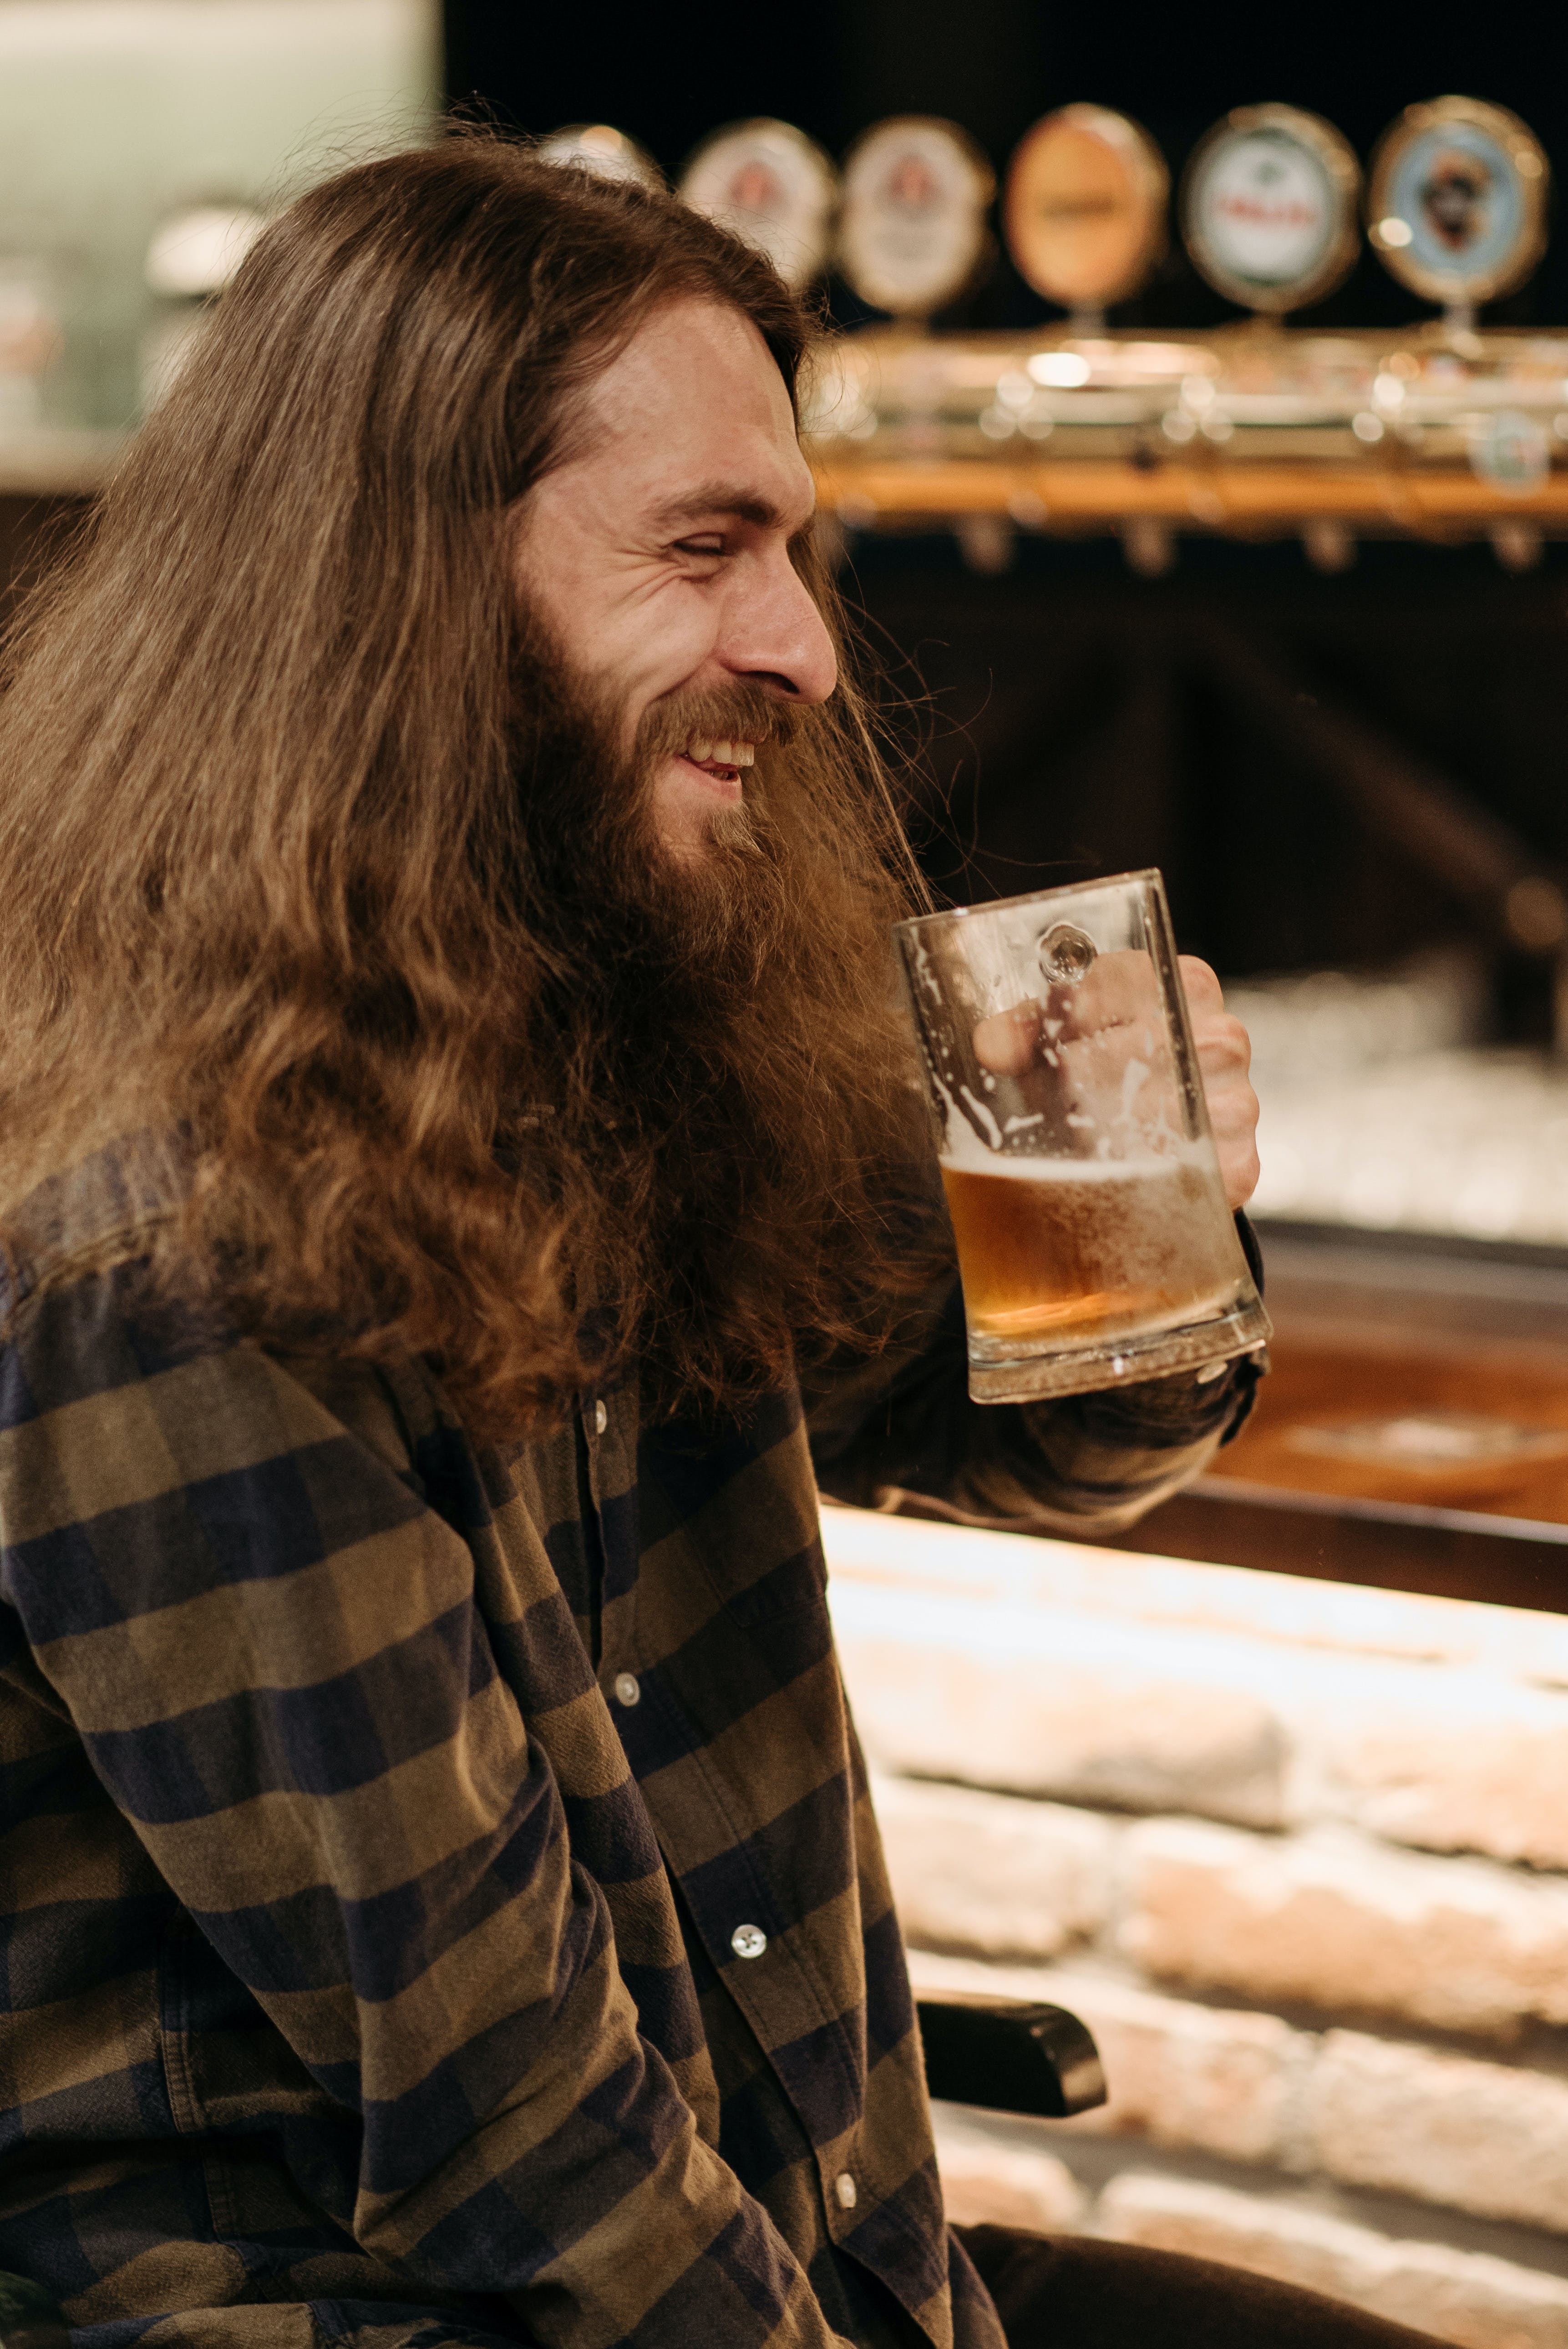 A man enjoying a drink at a bar | Source: Pexels